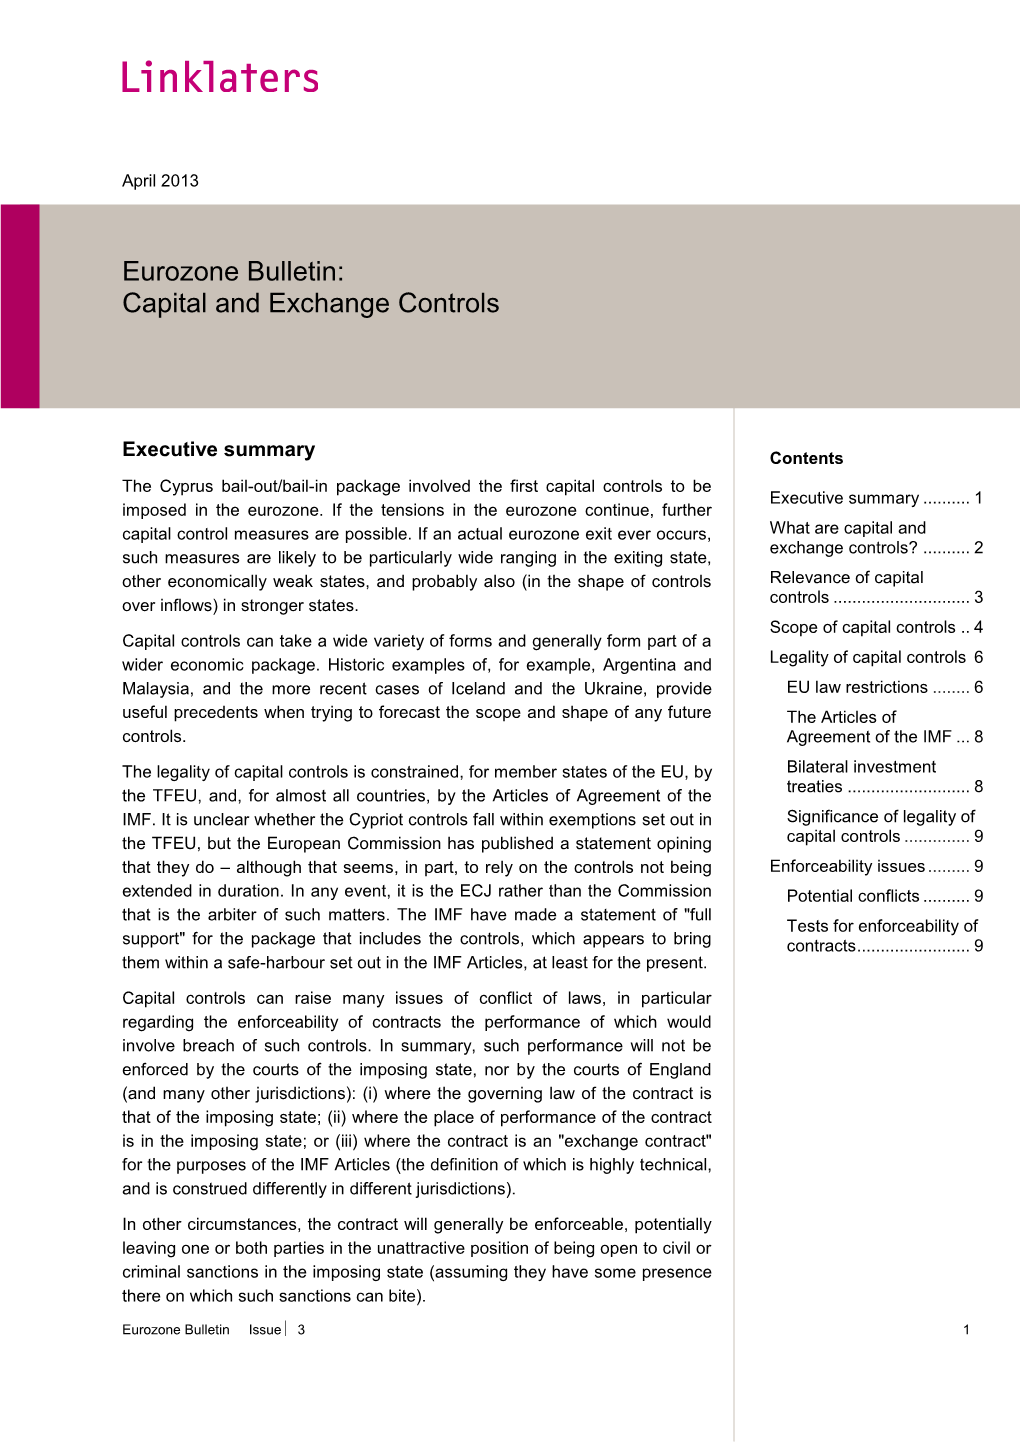 Eurozone Bulletin: Capital and Exchange Controls